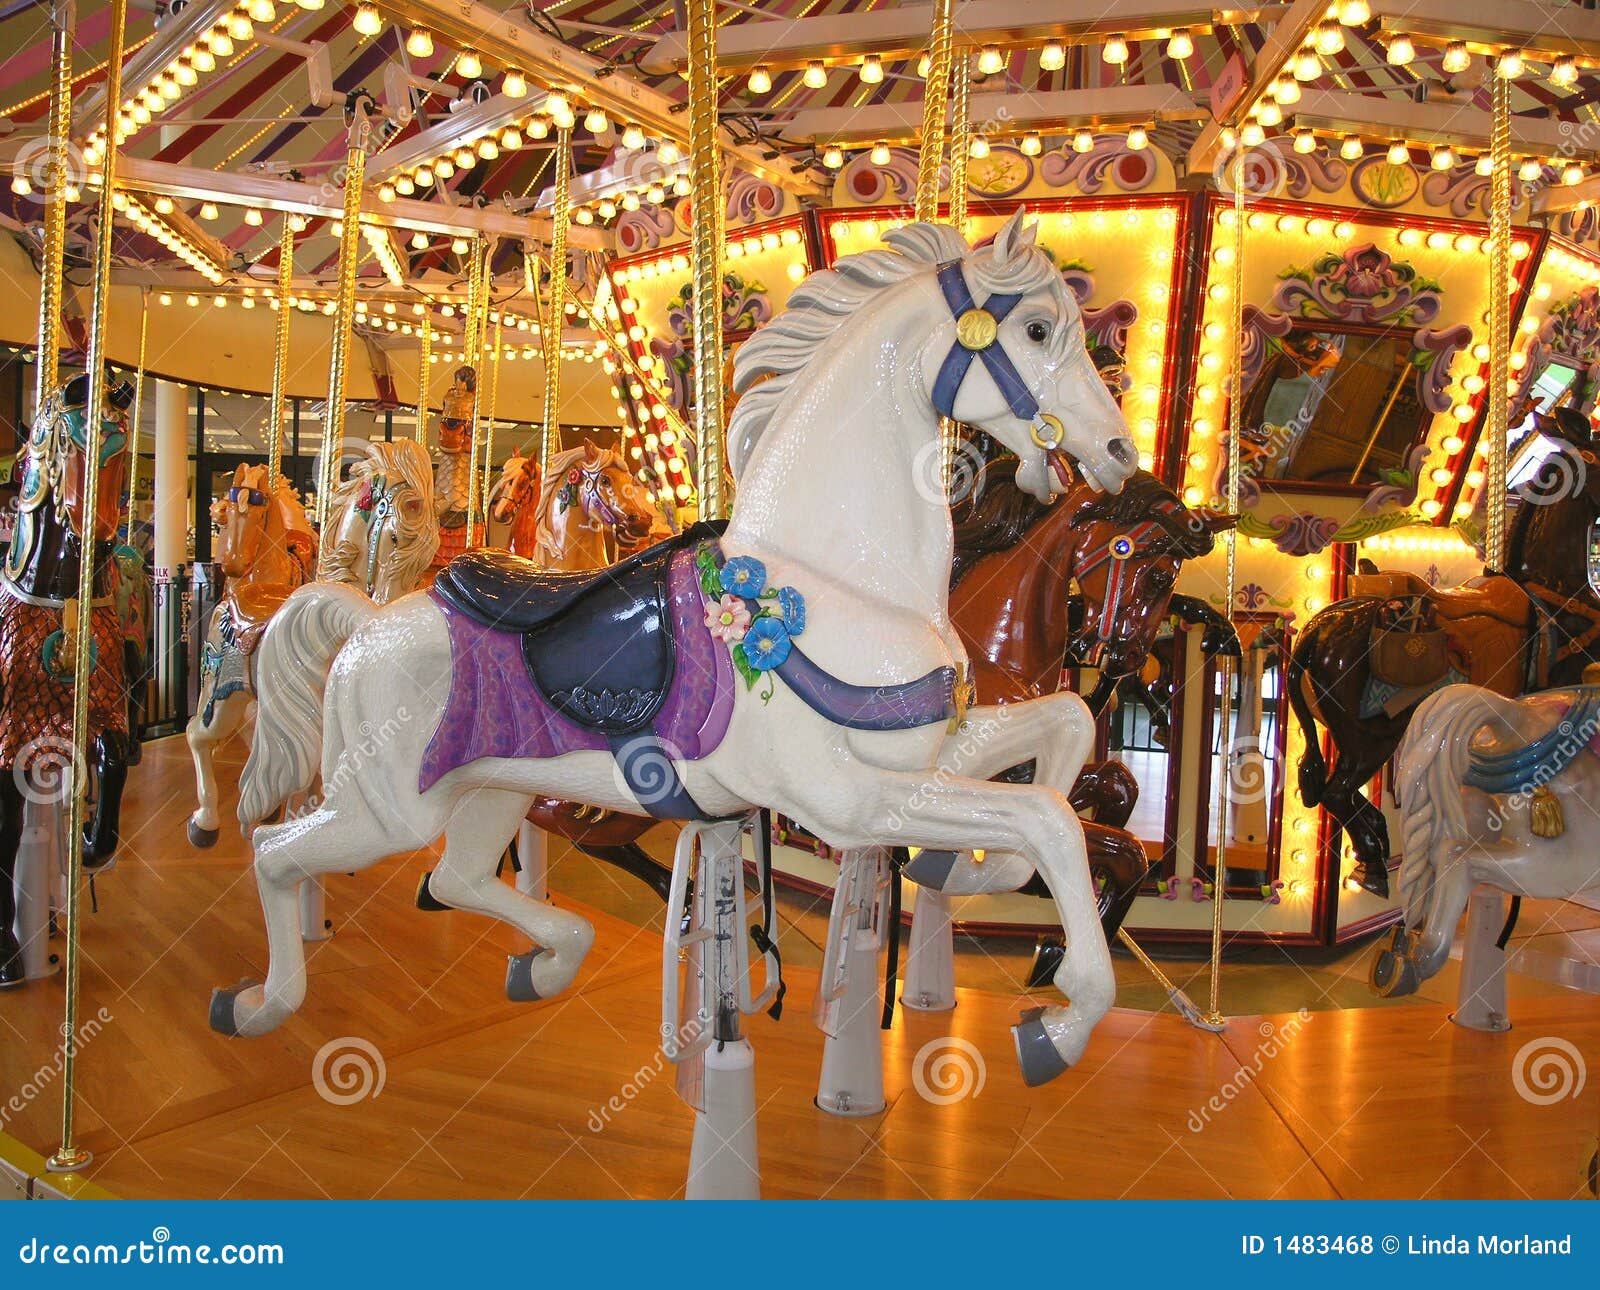 blød Erhvervelse Dem 456 Fantasy Carousel Photos - Free & Royalty-Free Stock Photos from  Dreamstime